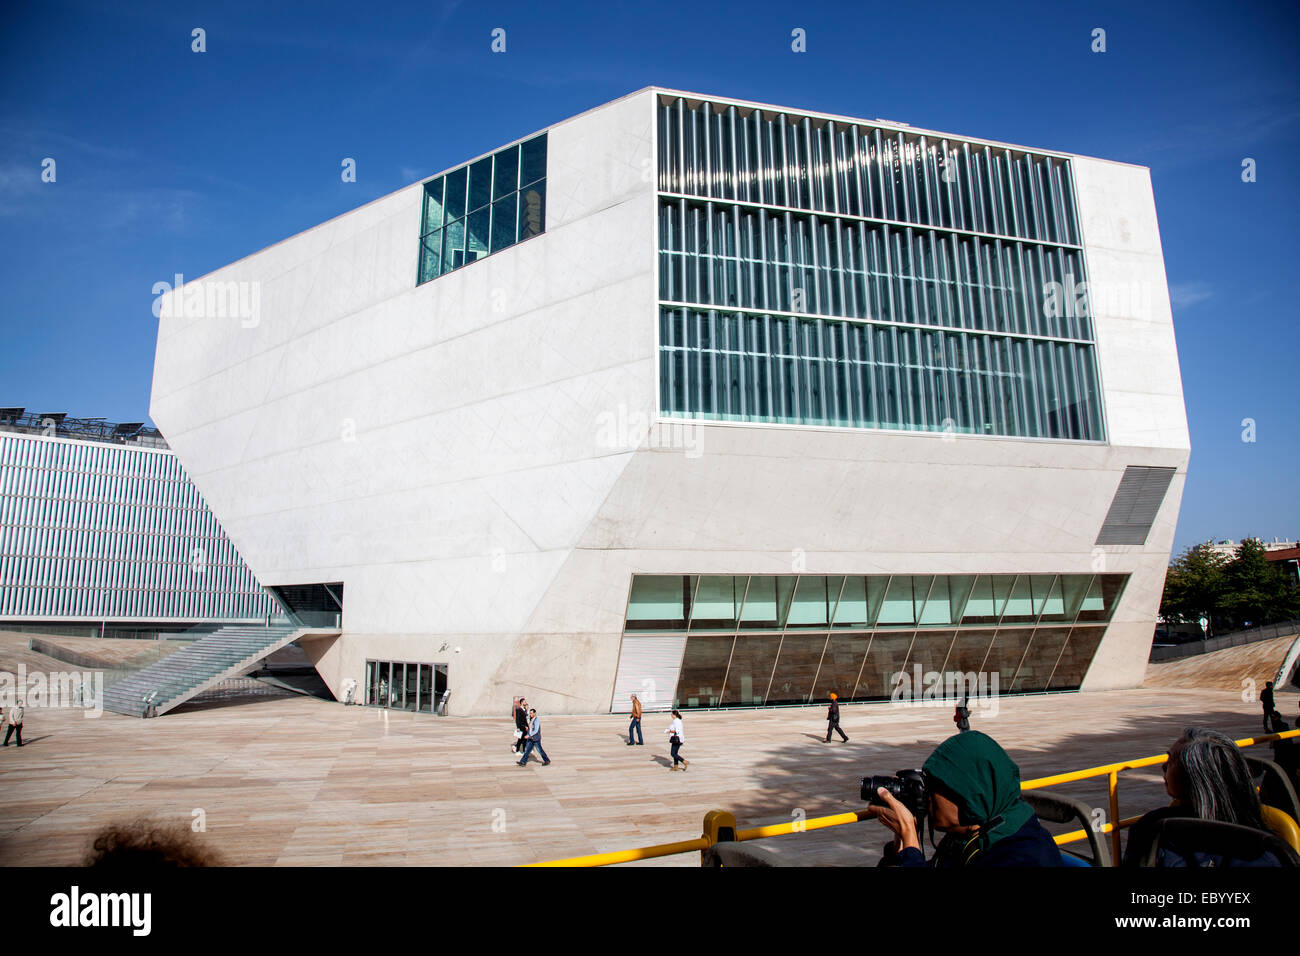 Casa Da Musica Oporto.  Music House, Porto, Portugal by dutch architect Rem Koolhaas taken from a tourist bus. Stock Photo